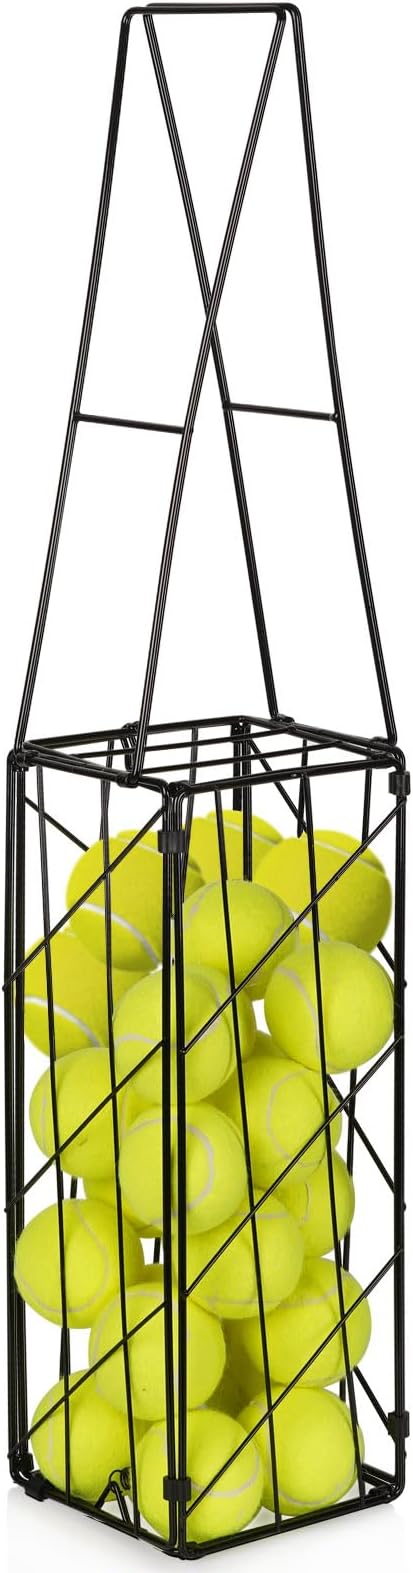 exttlliy tennis ball hopper ball basket portable pickleball hopper picker  ‎exttlliy b0cdlf83b1